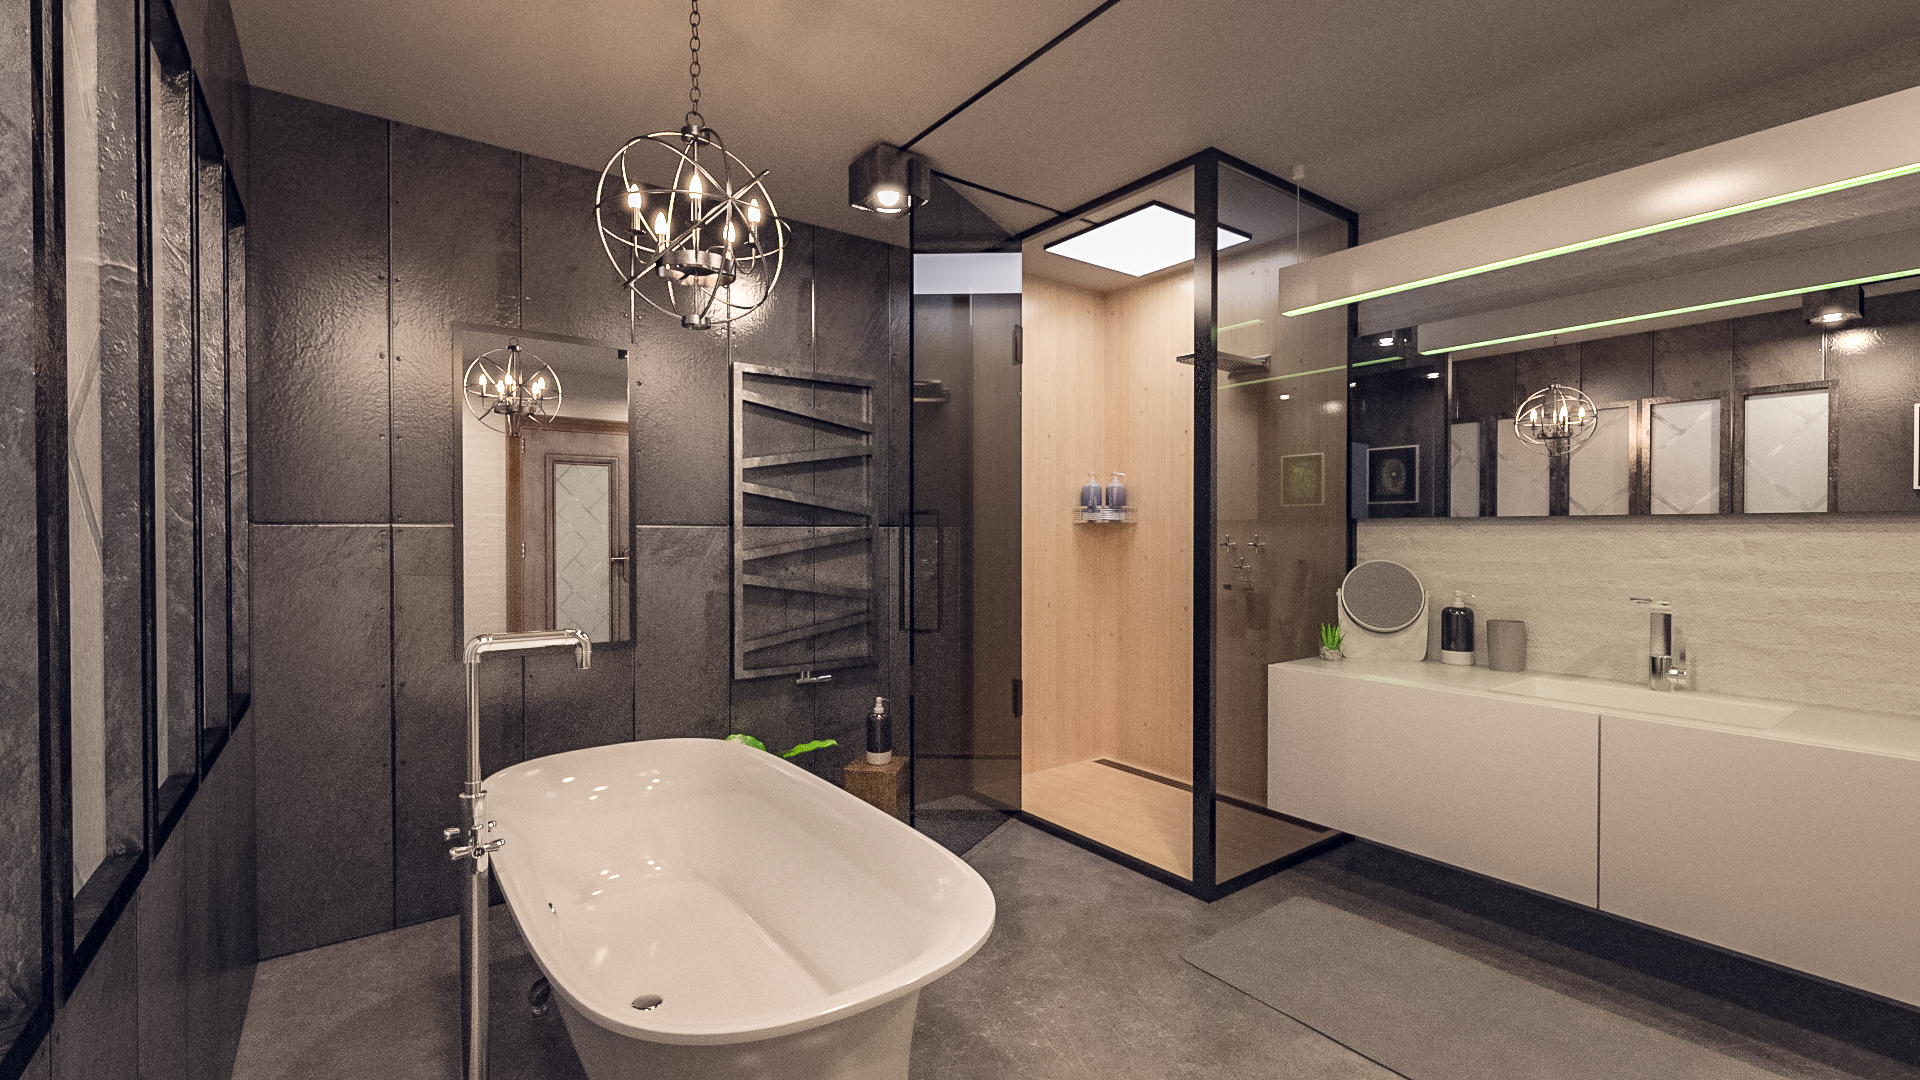 Industrial Bathroom by: Tesla3dCorp, 3D Models by Daz 3D